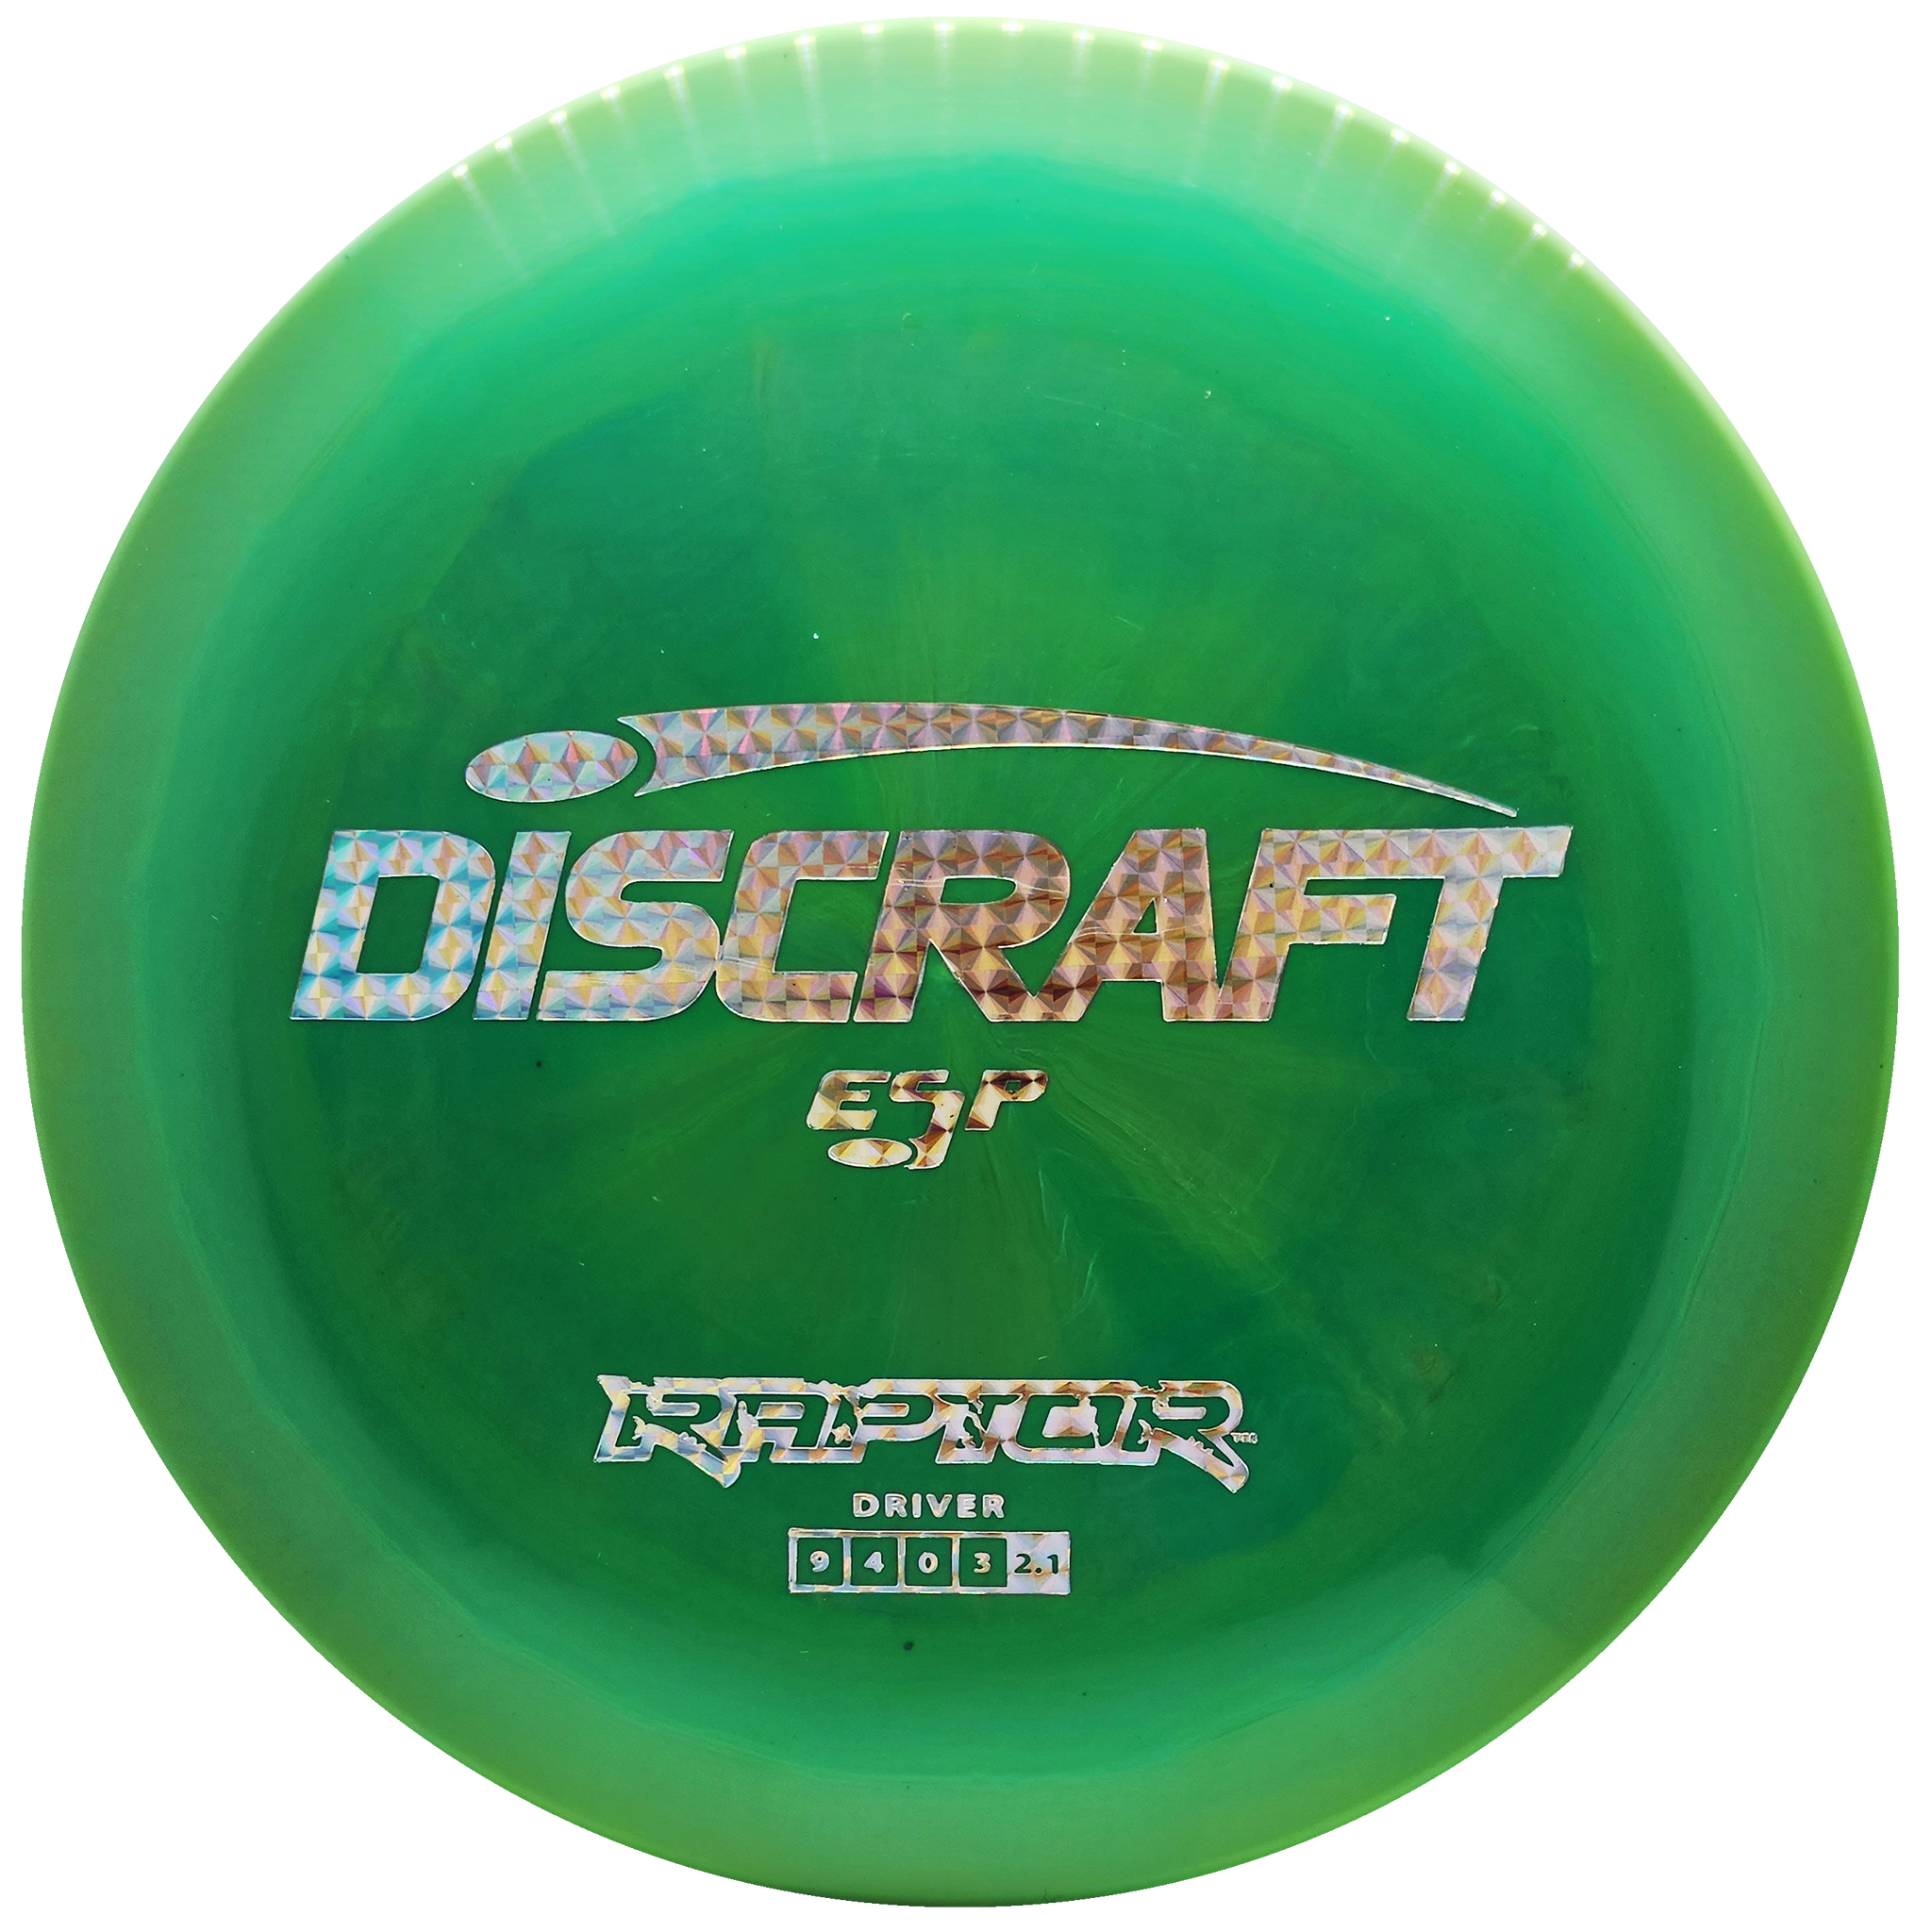 Discraft: ESP Raptor - Green/Silver